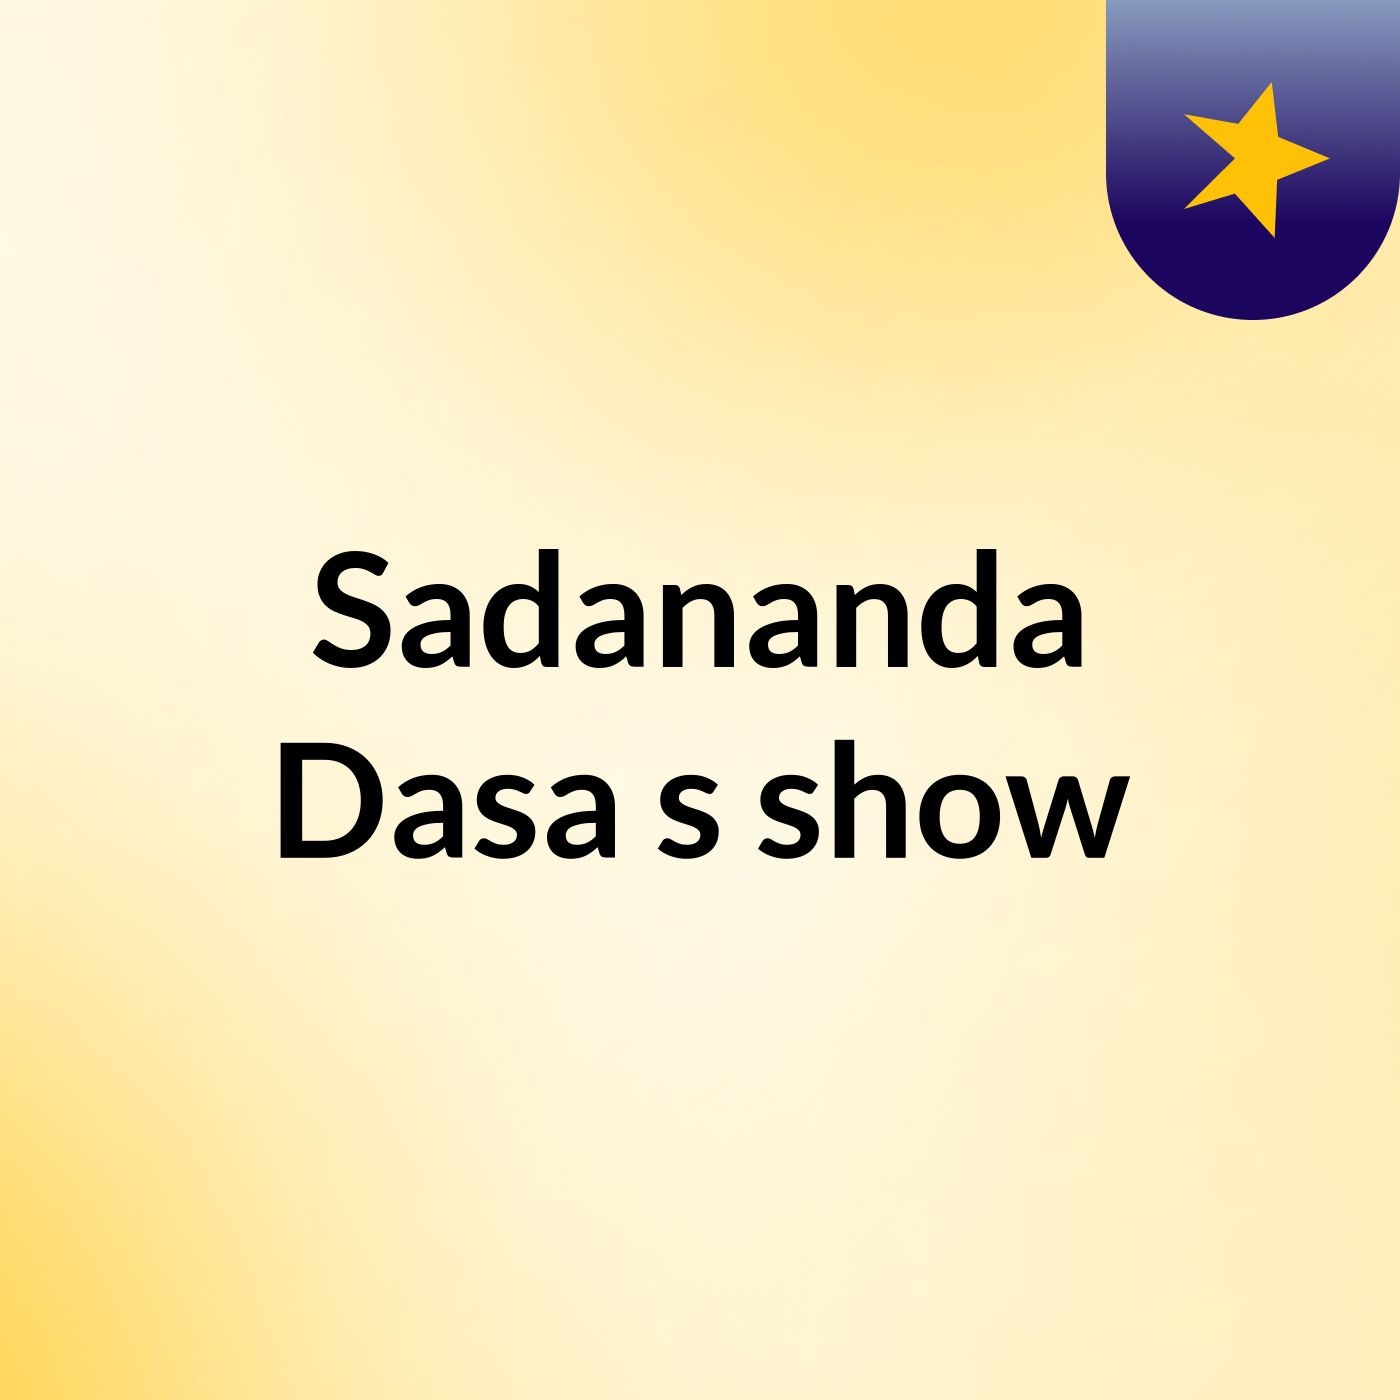 Sadananda Dasa's show